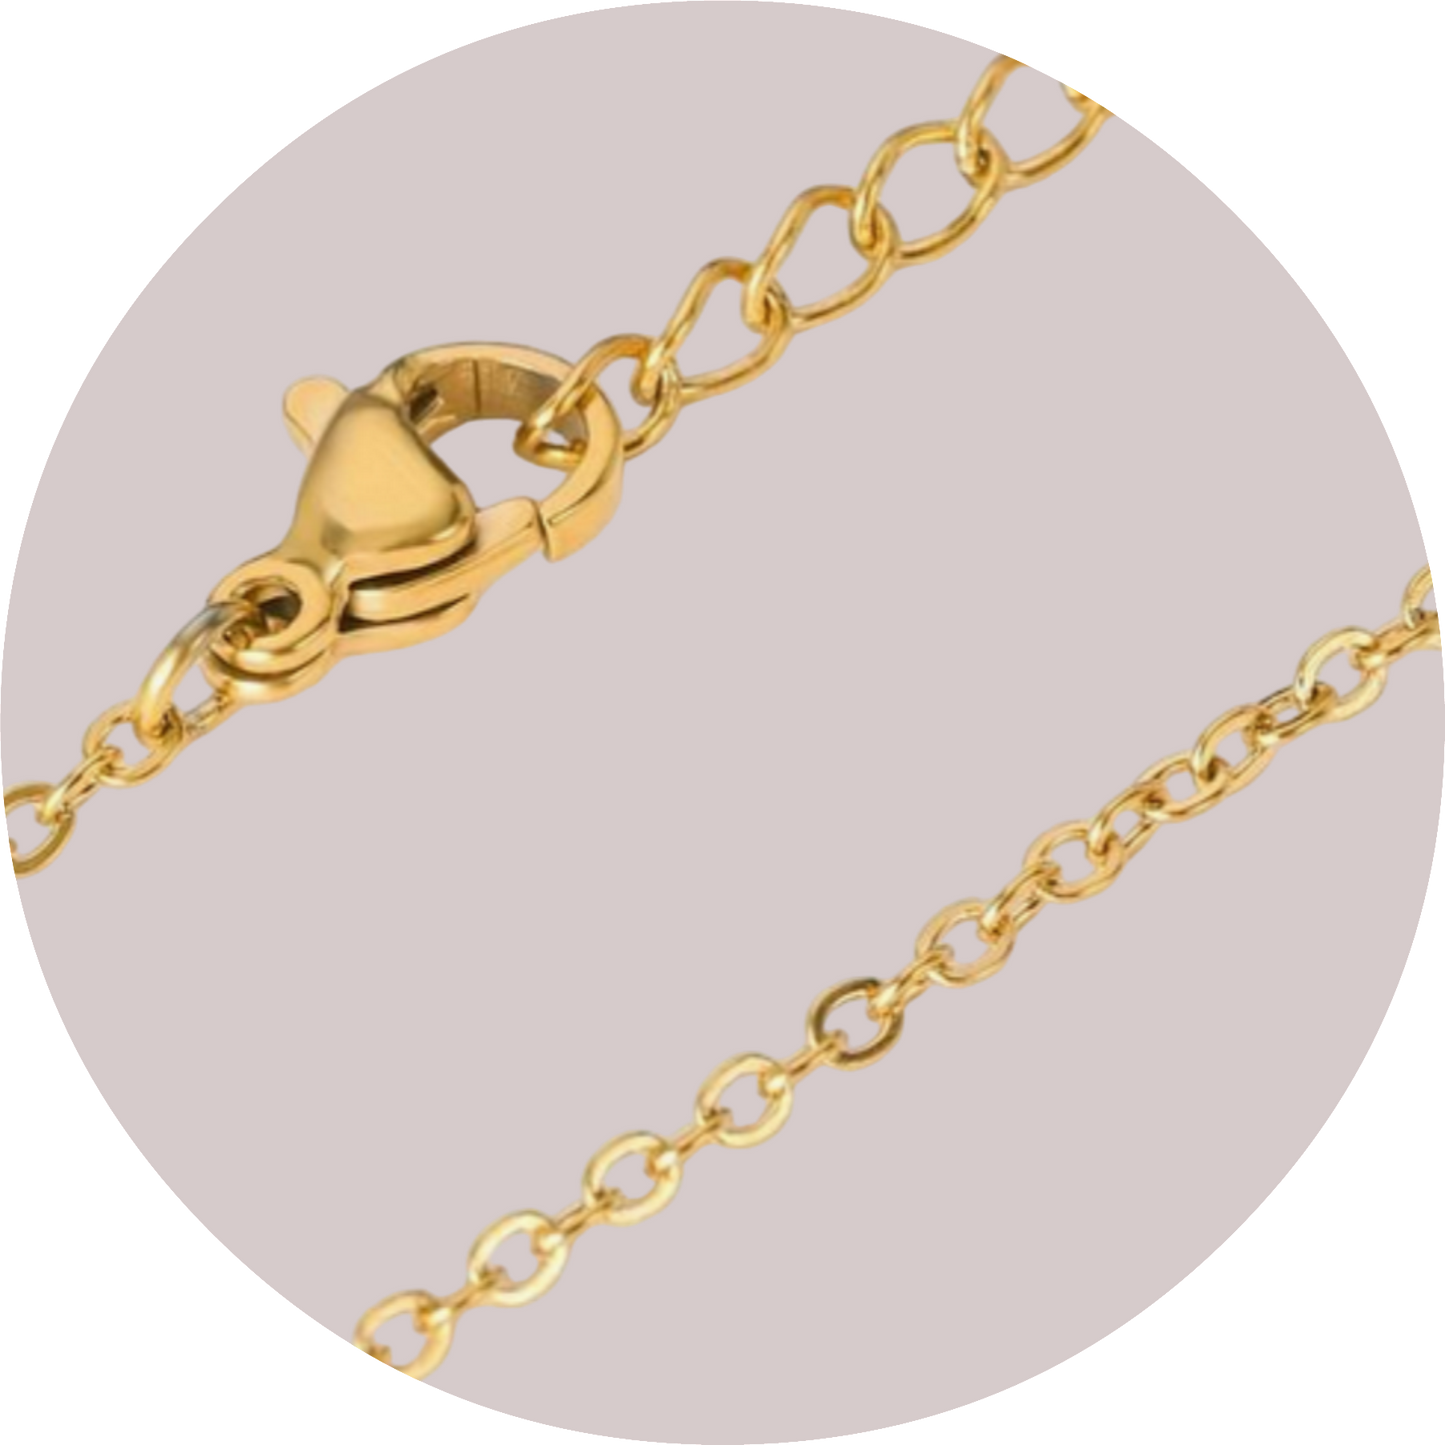 Engelsrufer stainless steel pendant "Gold" with animal hair hemisphere